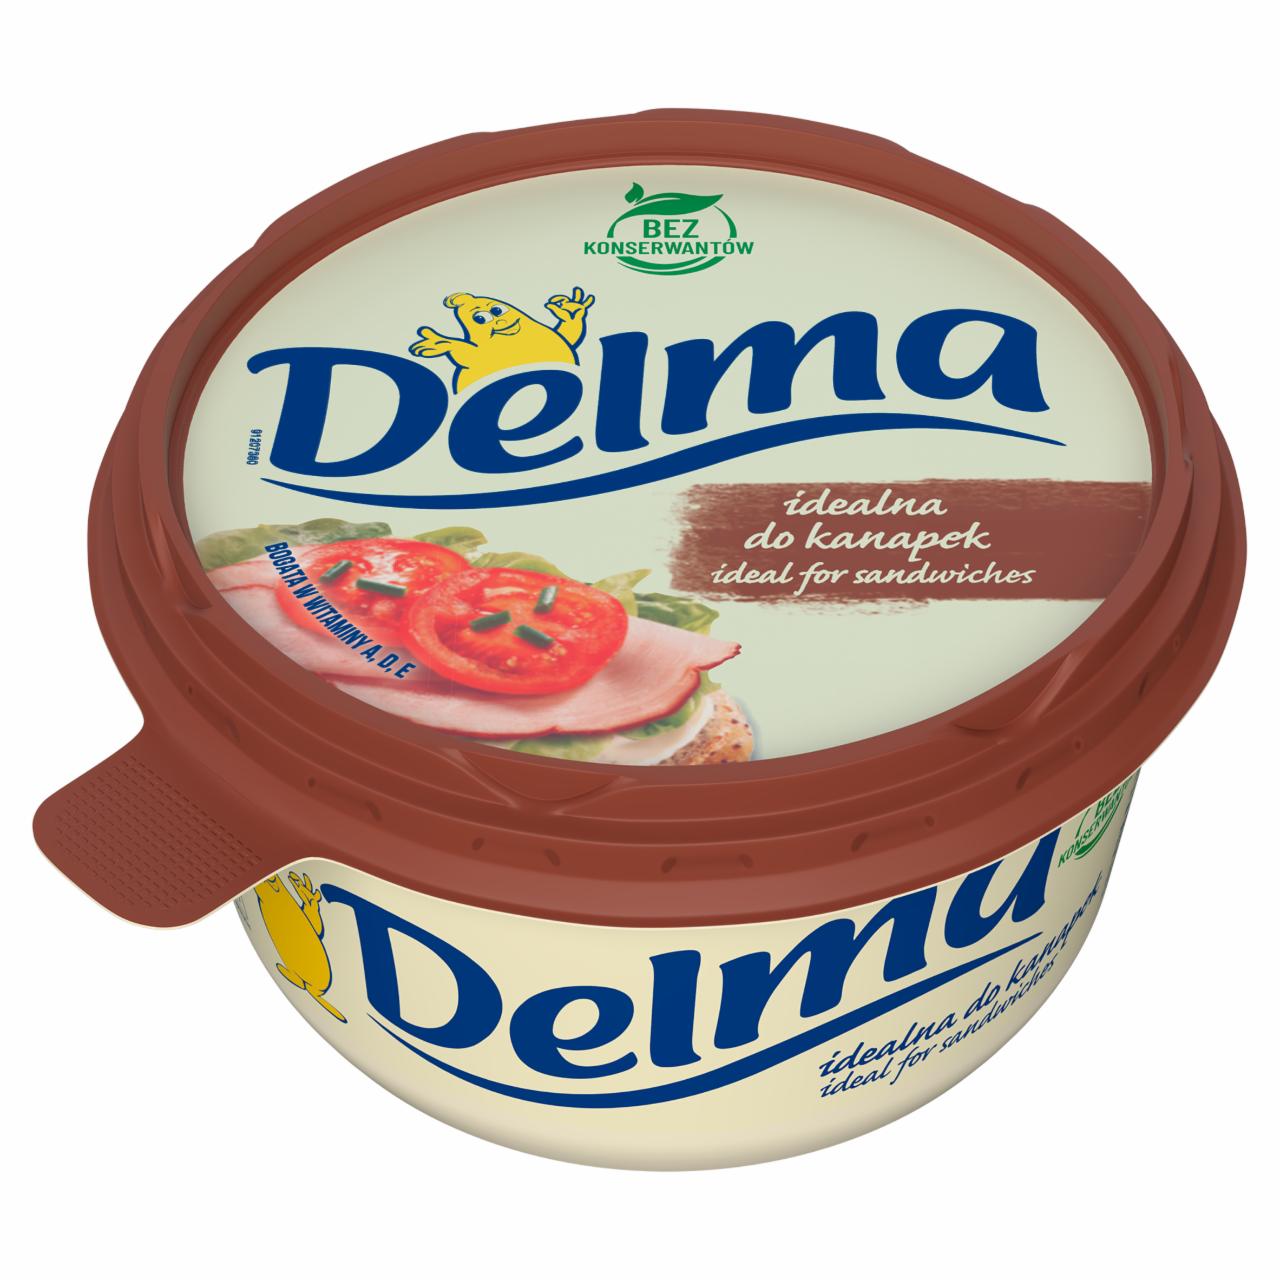 Fotografie - Extra margaryna idealna do kanapek o smaku masła Delma